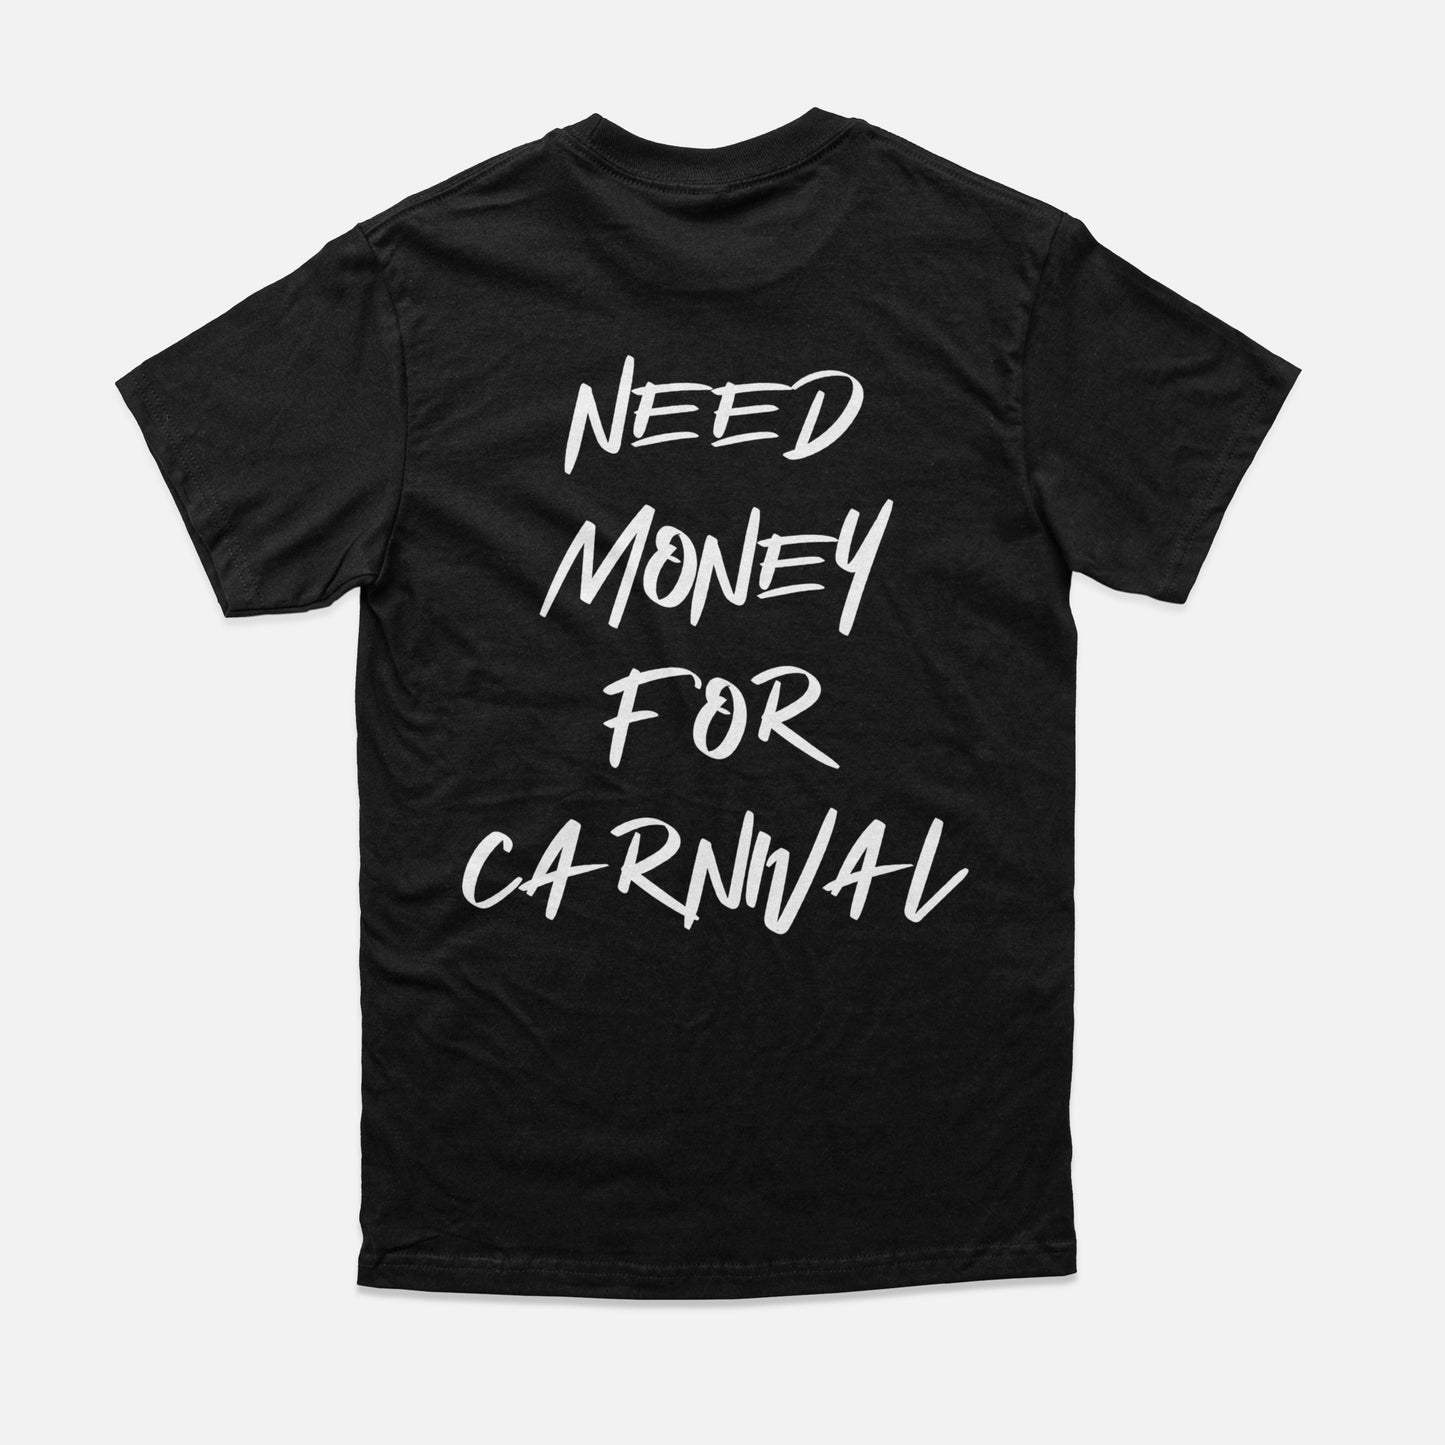 One Caribbean "Need Money For Carnival" Tee (Black/ White)